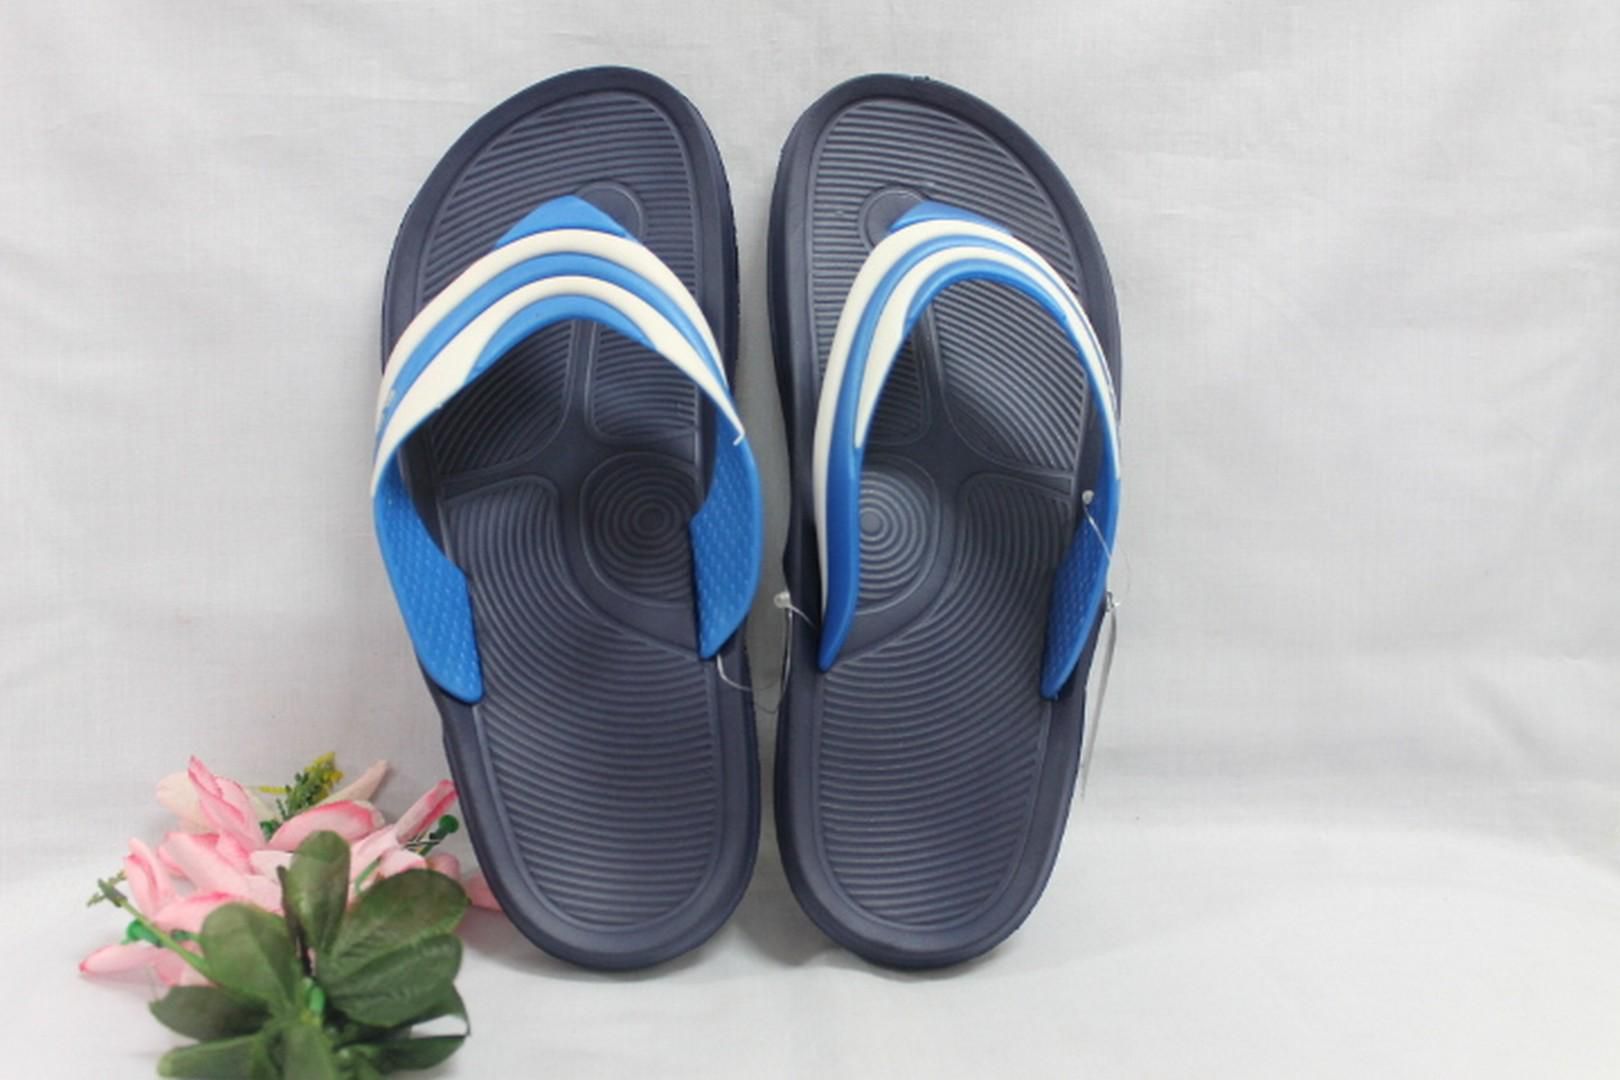 E8market 1 pair spako man slipper for casual used( Blue)